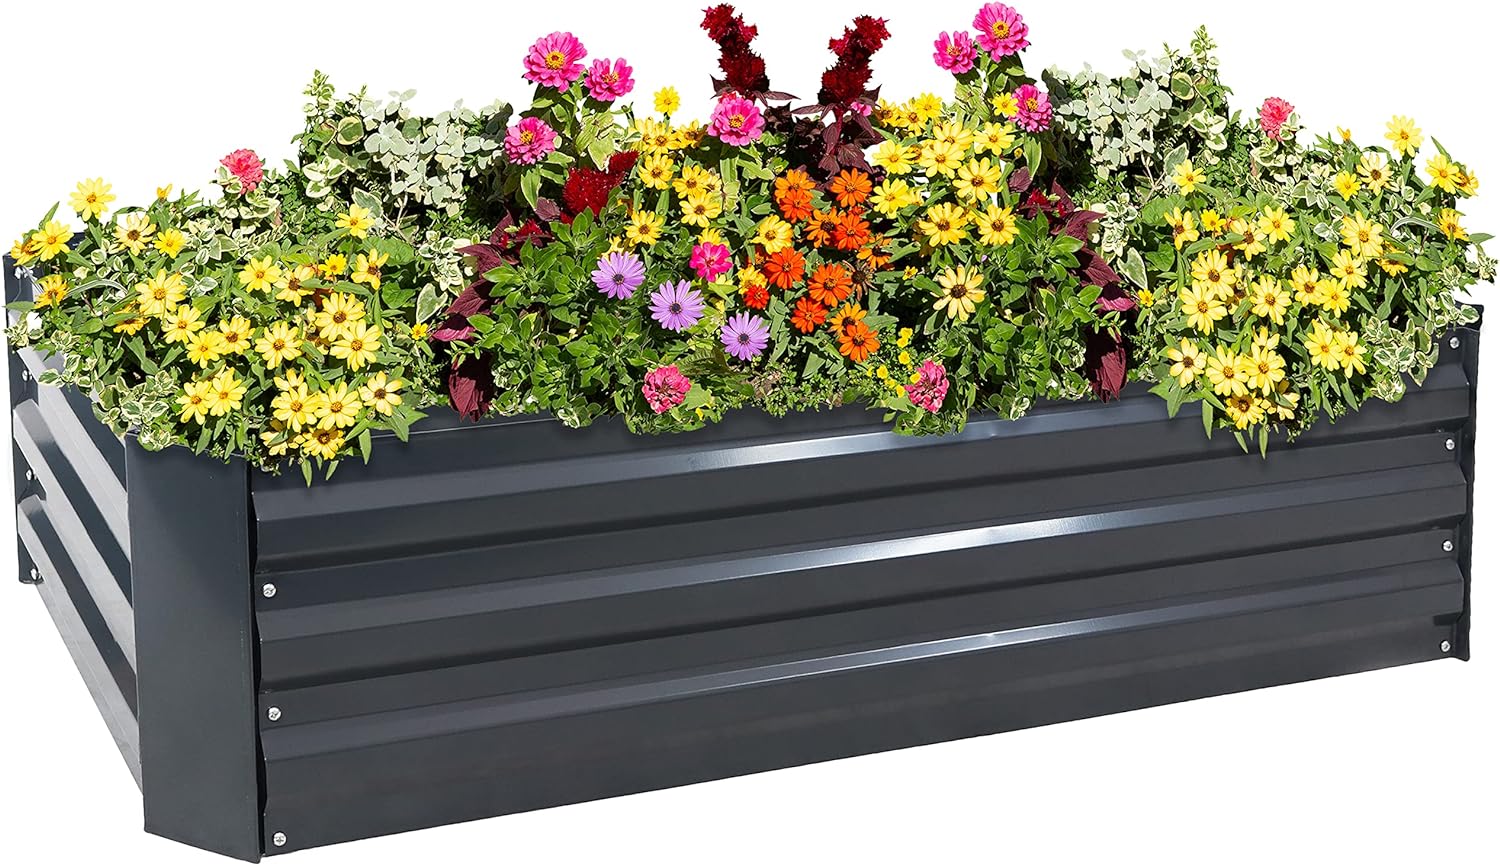 Sunnydaze Galvanized Steel Raised Vegetable Garden Beds